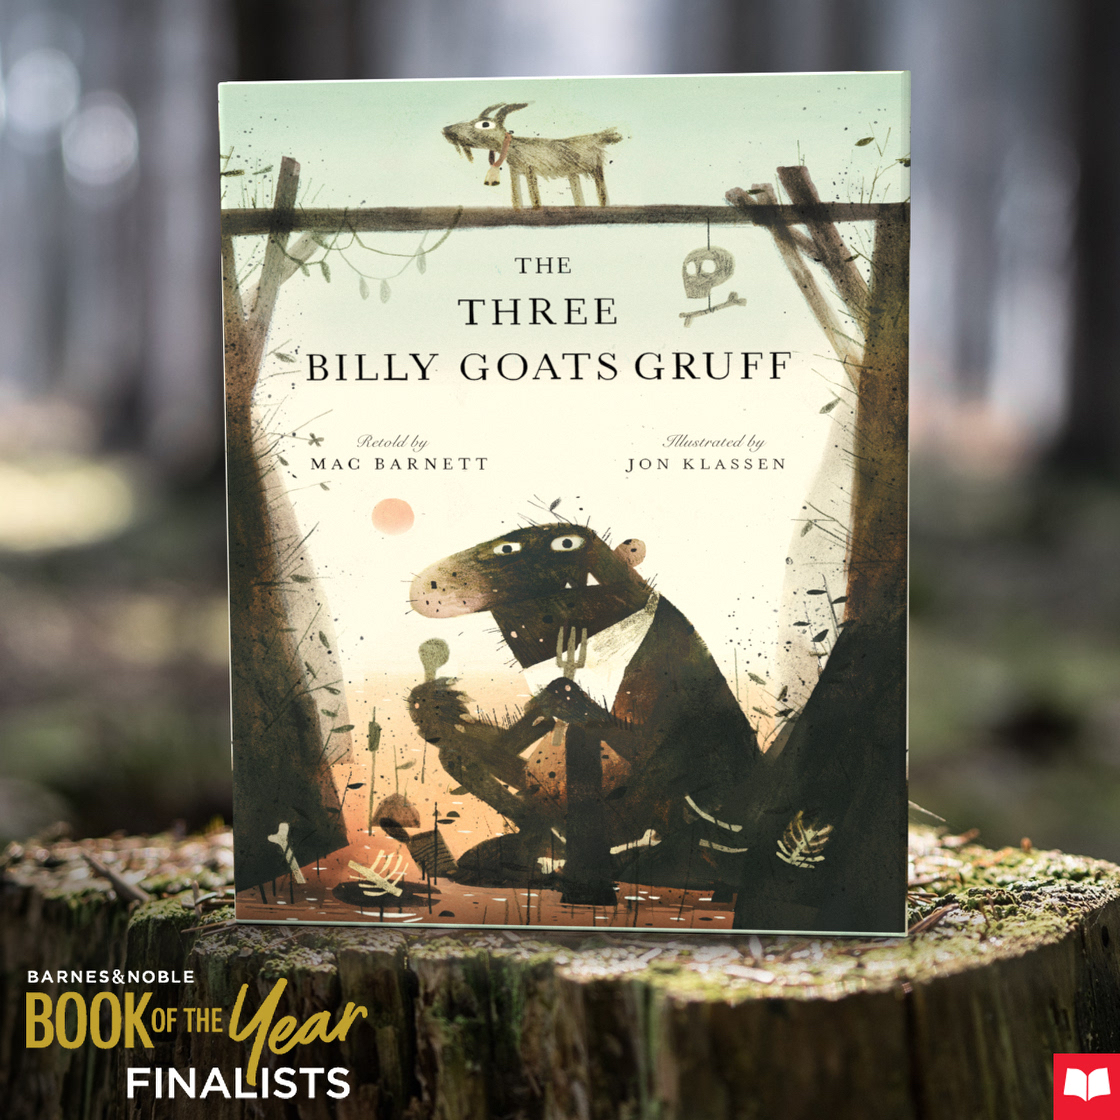 THE THREE BILLY GOATS GRUFF is a Barnes & Noble Book of the Year finalist! Congratulations to Mac Barnett and Jon Klassen! Learn more at bit.ly/3NRSrZH #BNBoTY 🐐 @macbarnett 🐐 @burstofbeaden 🐐 @BNBuzz